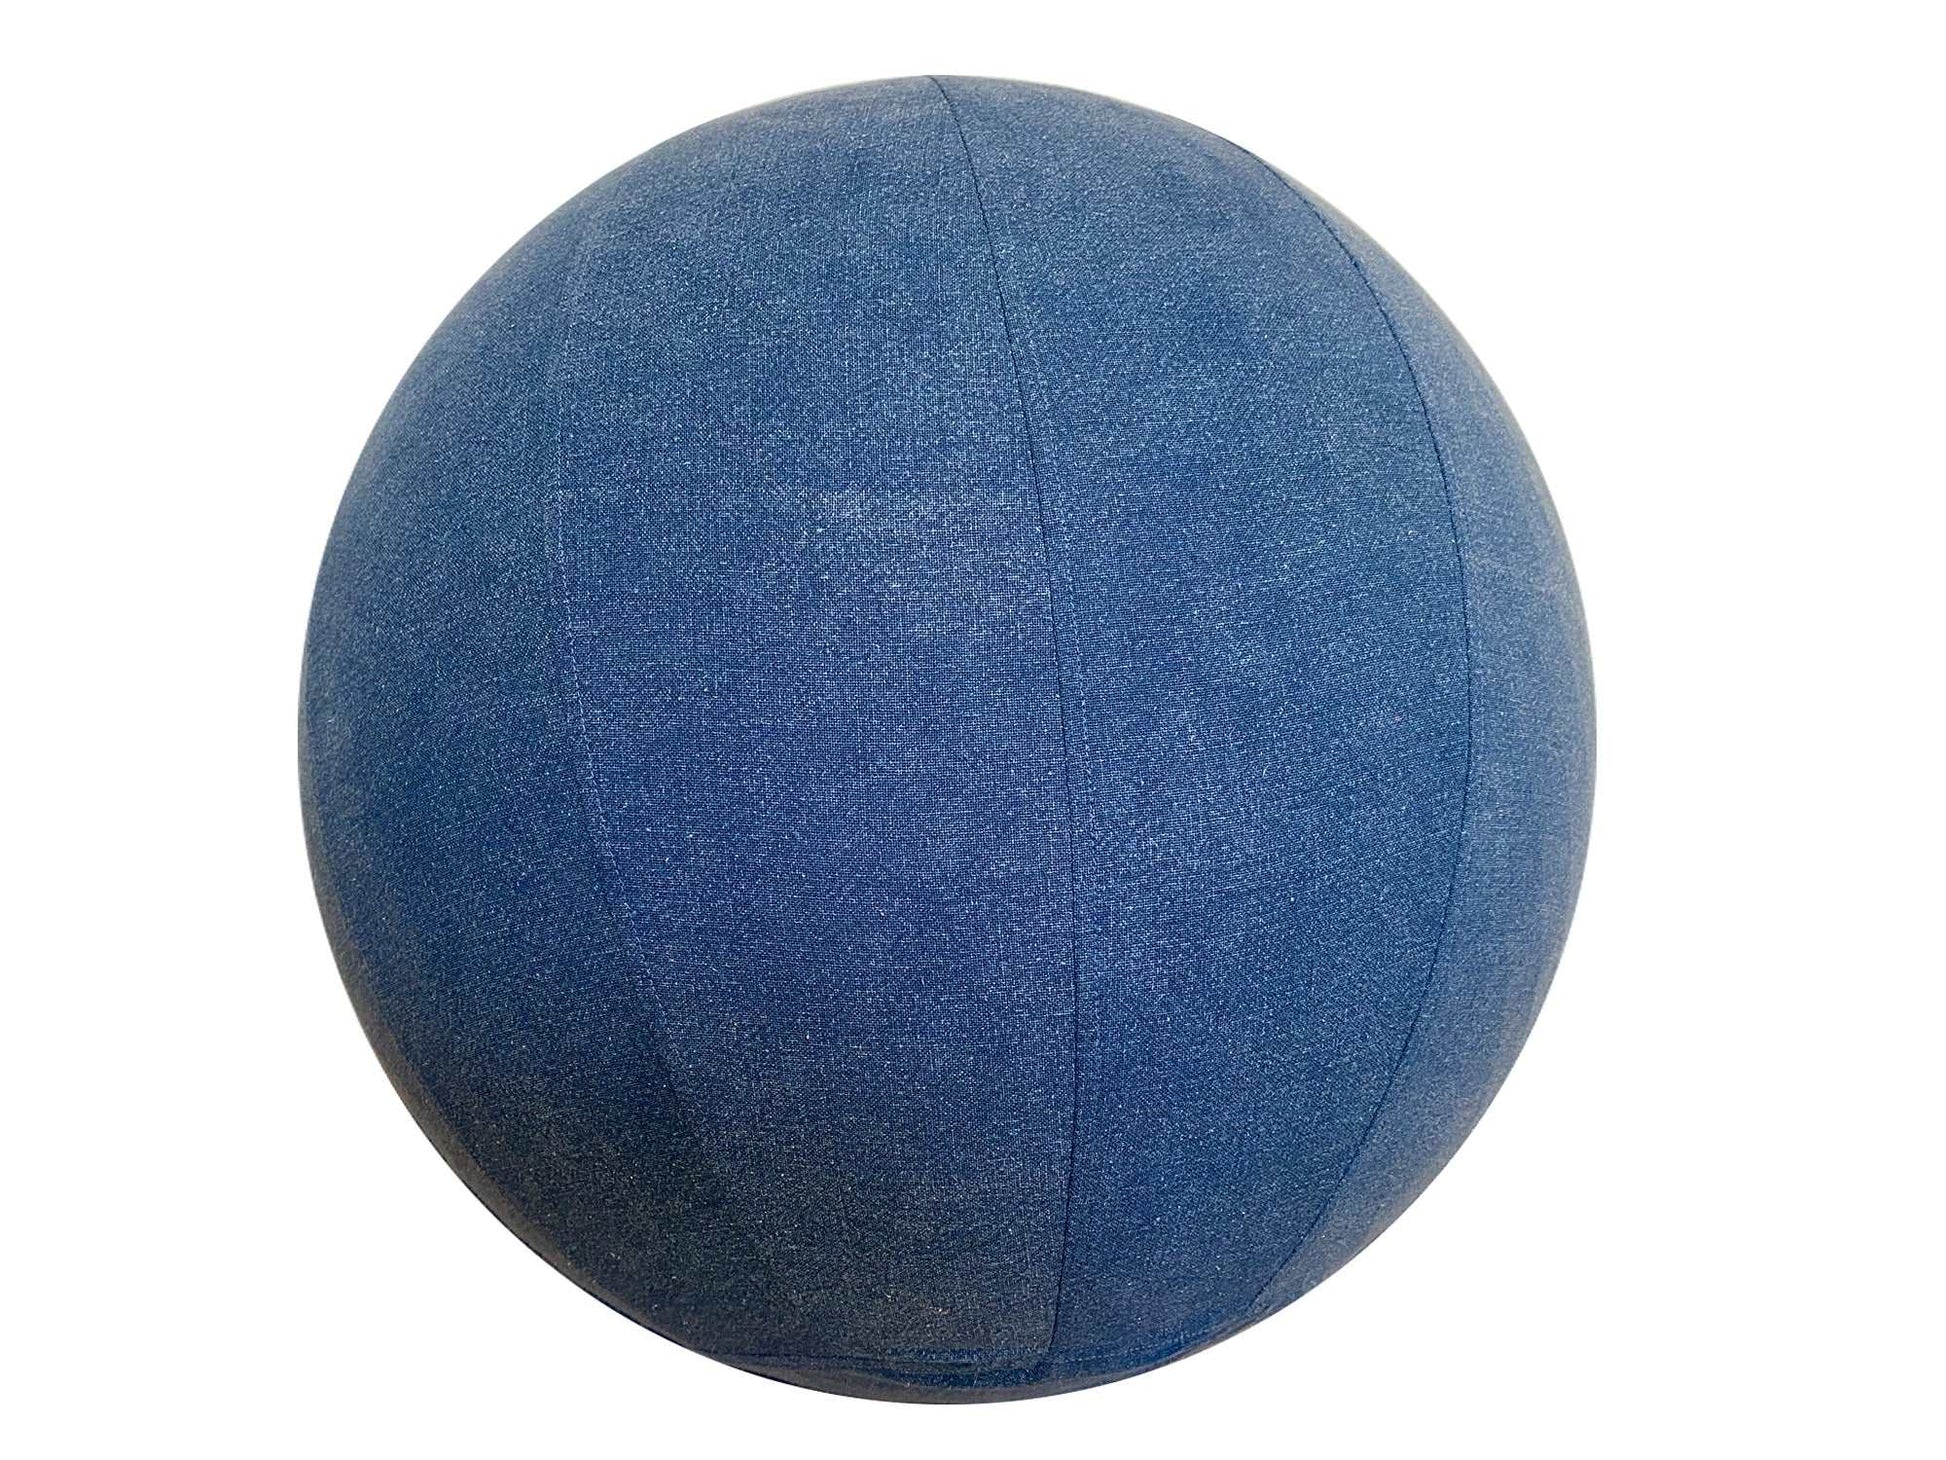 65cm Balance Ball / Yoga Ball Cover: Denim Stonewash